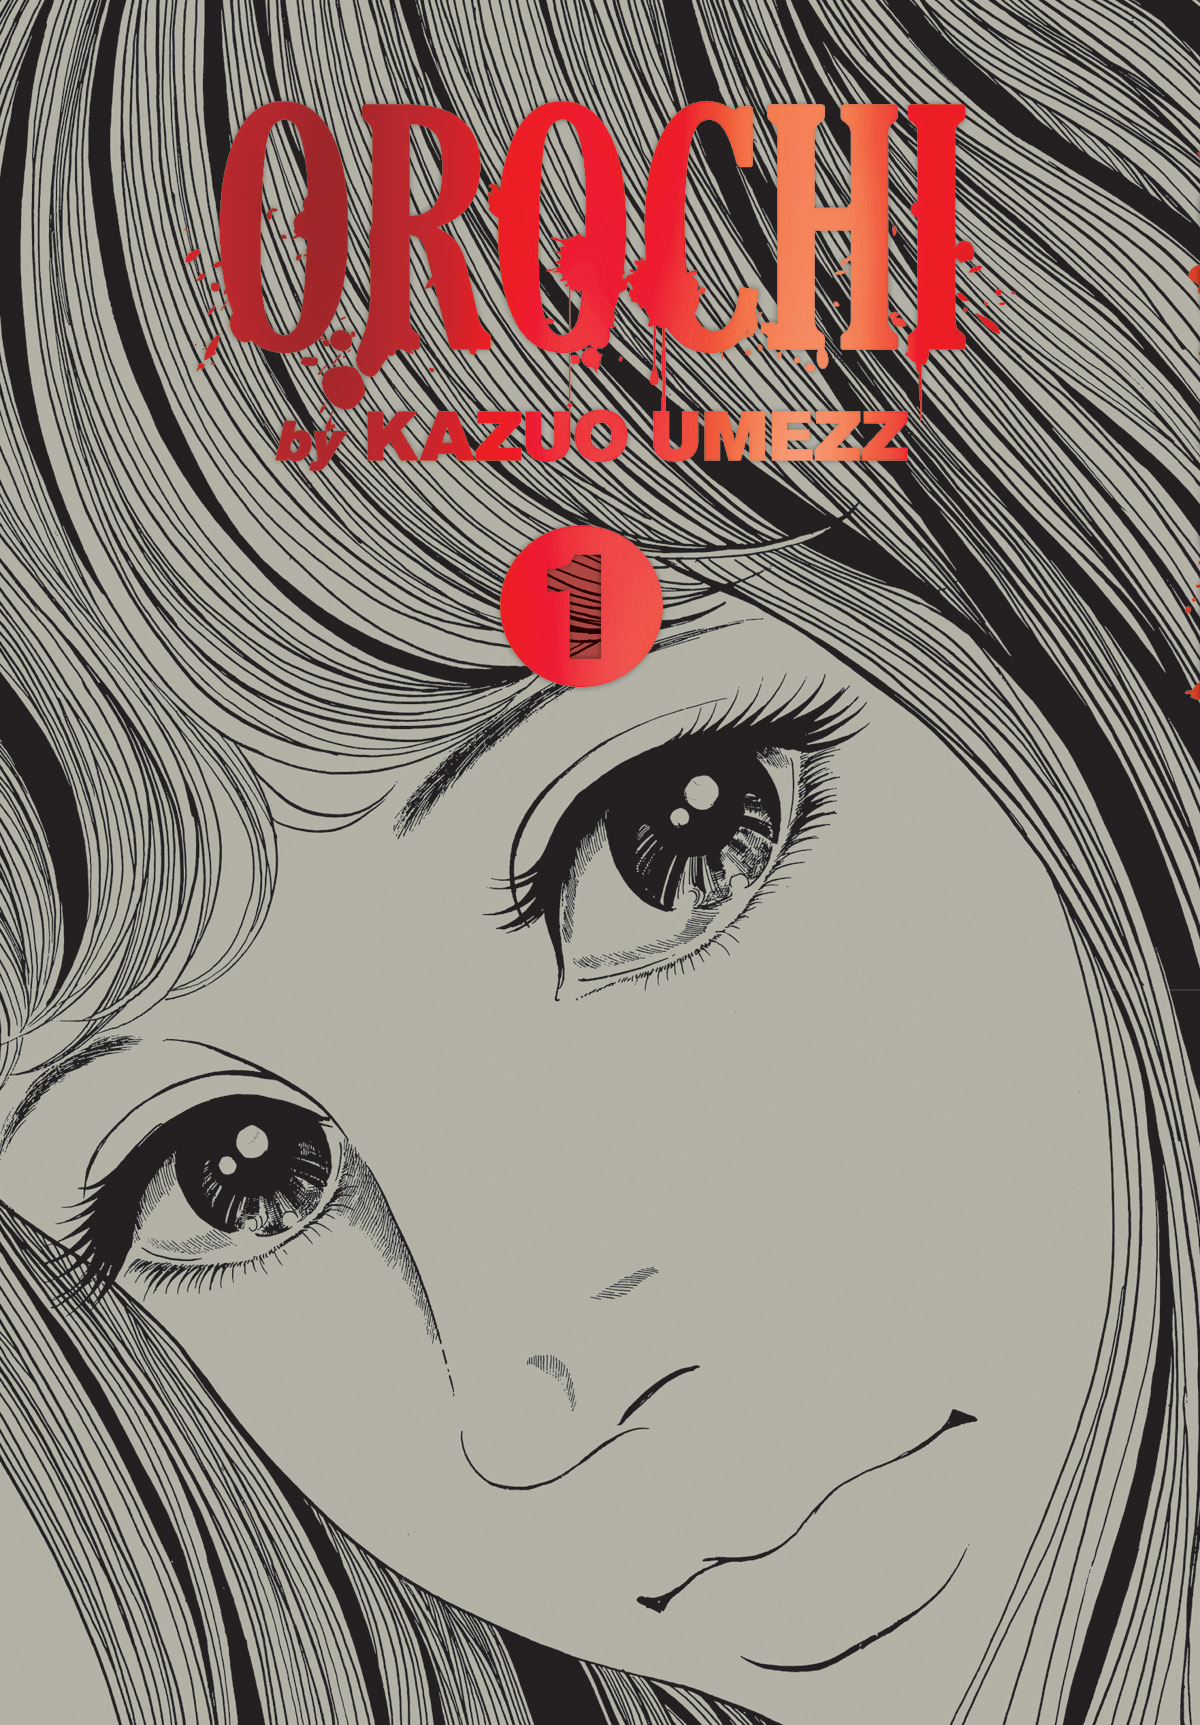 Orochi Perfect Edition Graphic Novel Volume 1